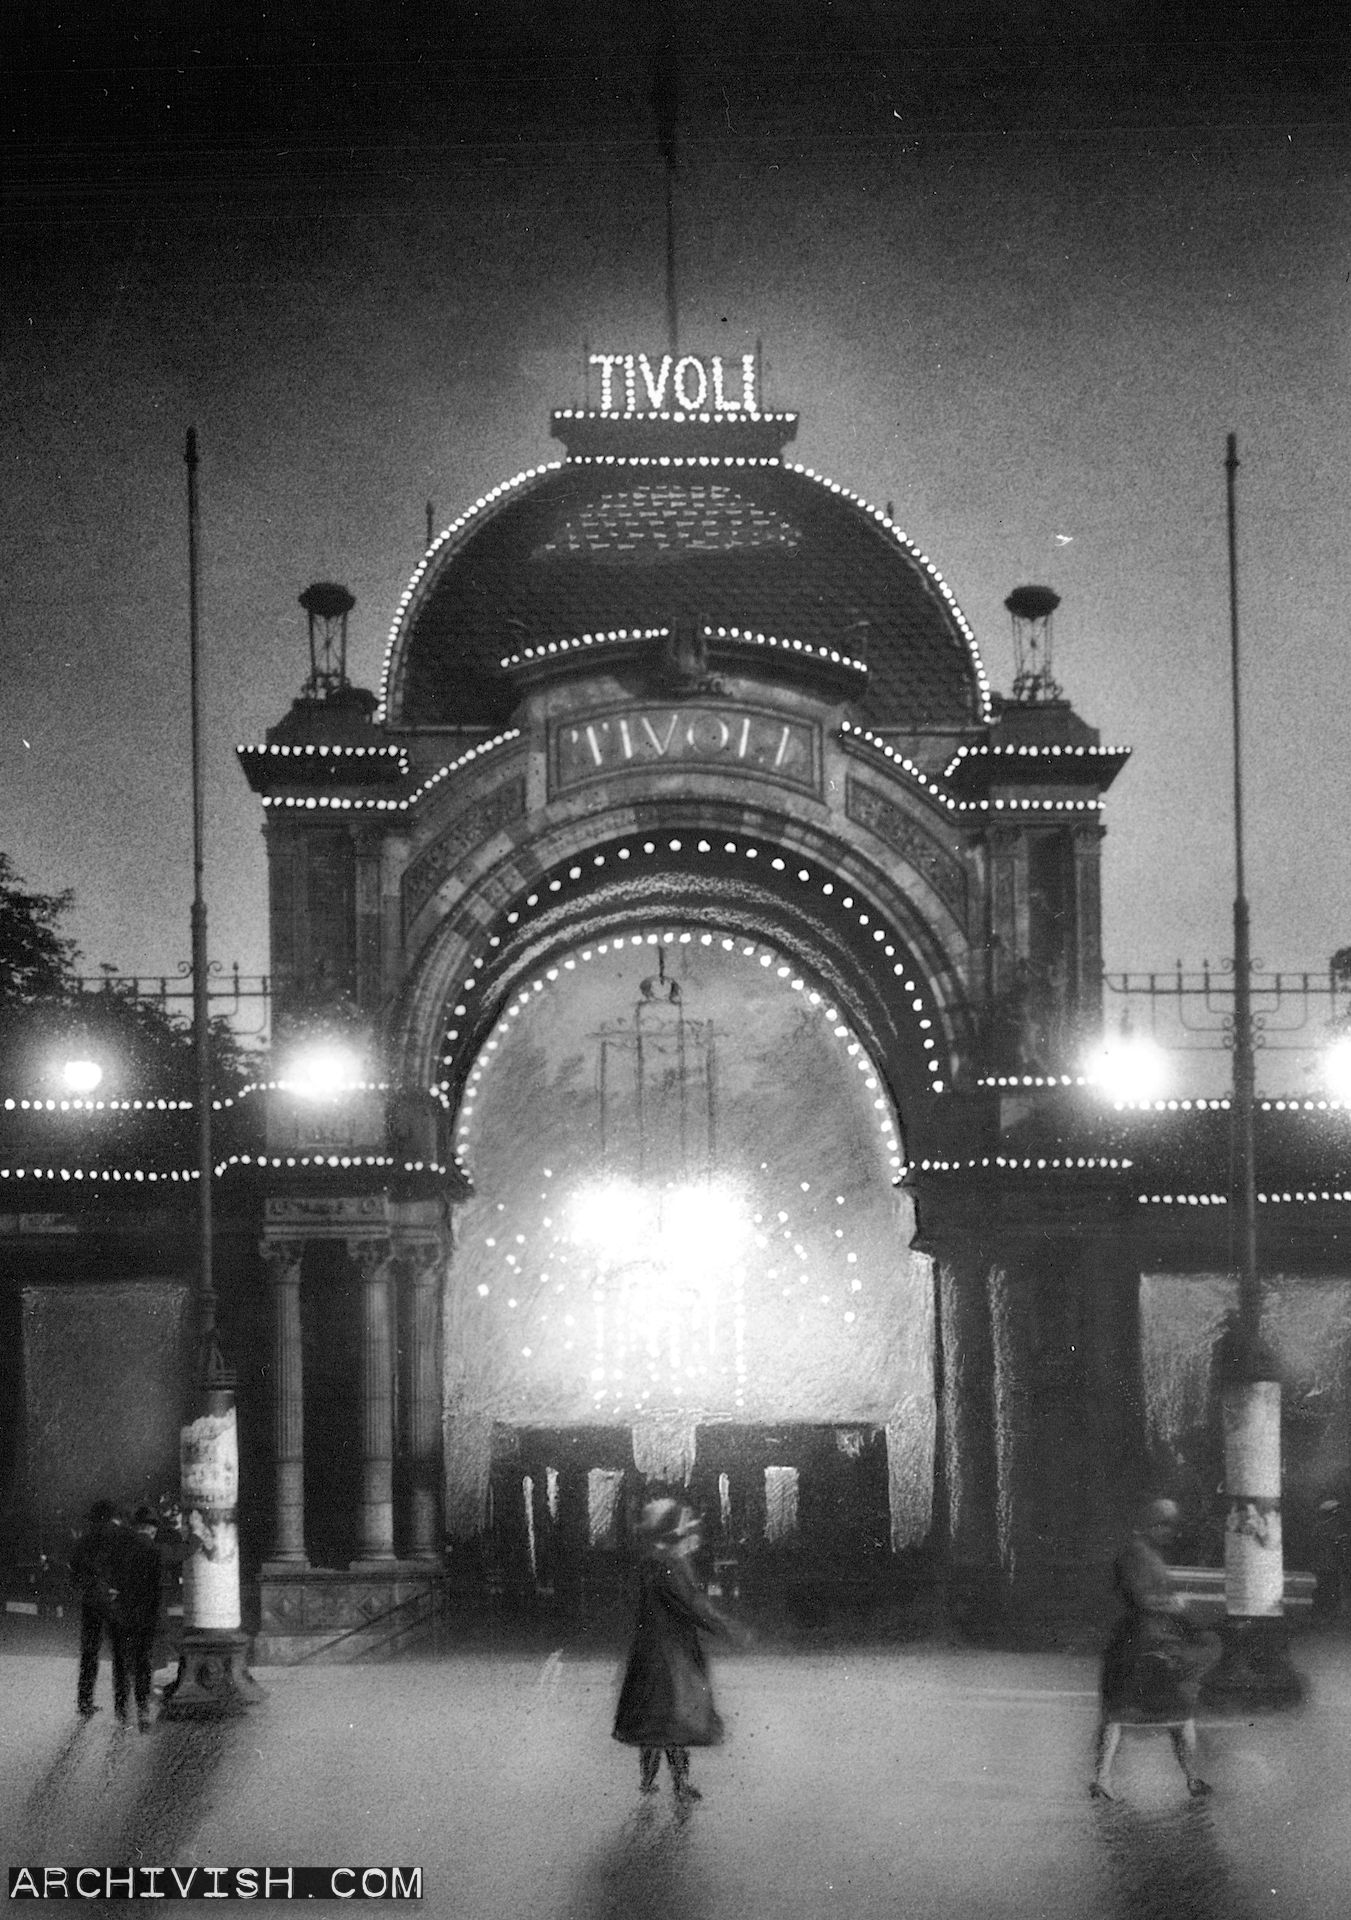 The entrance to the amusement park Tivoli in Copenhagen, Denmark